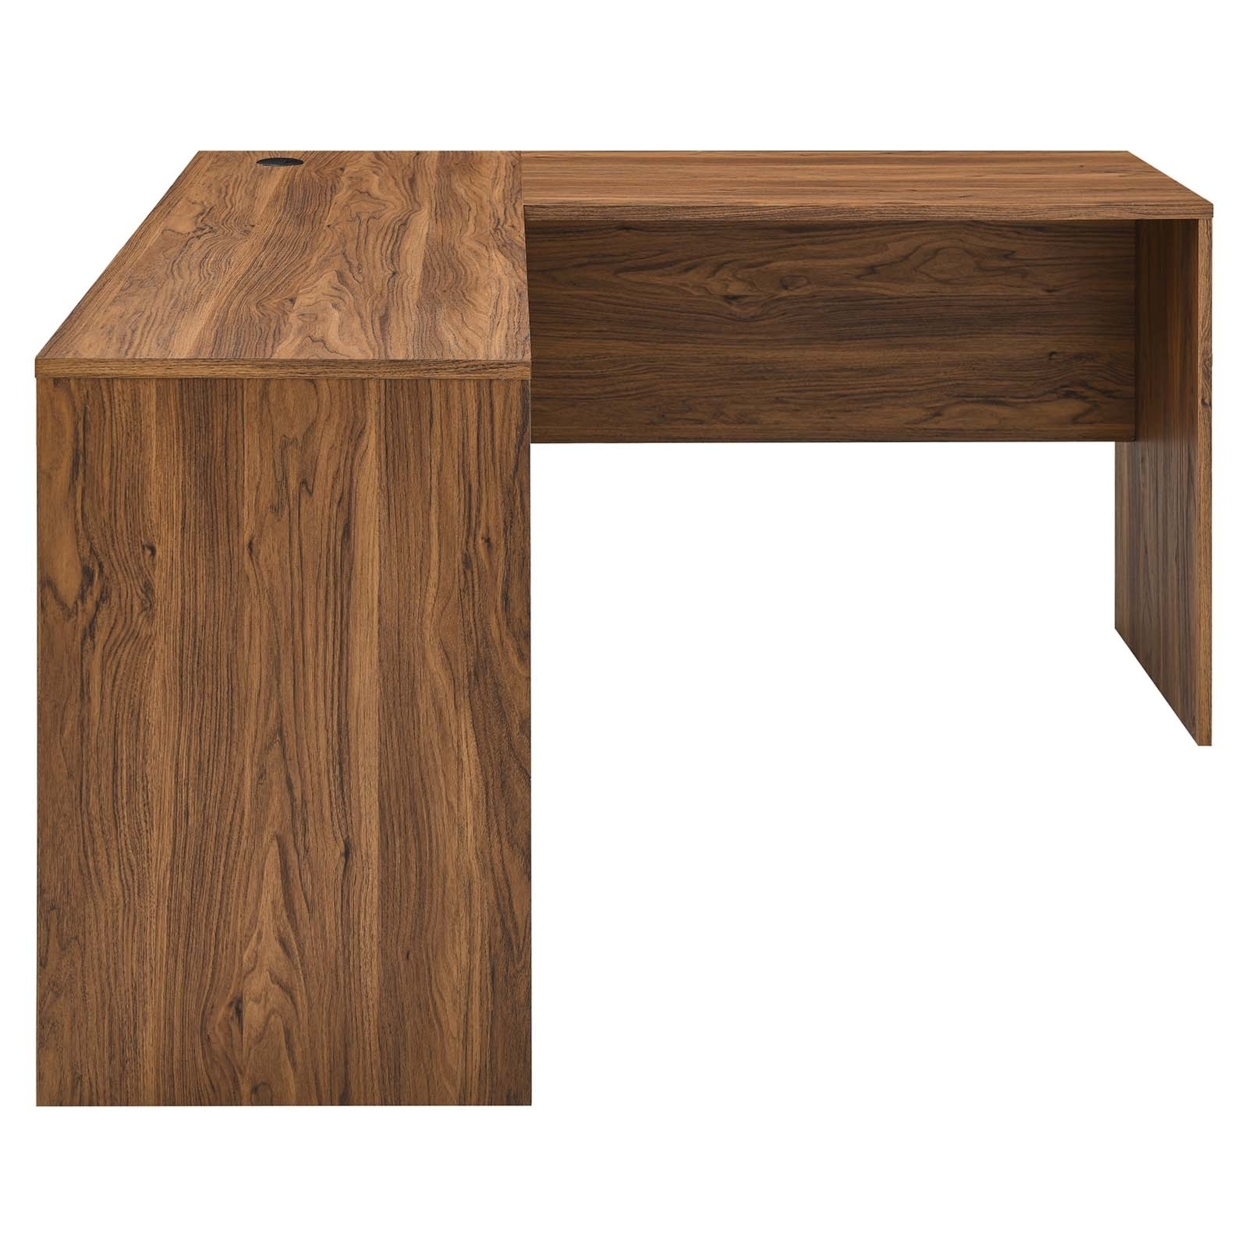 Transmit Wood Desk And File Cabinet Set, Walnut White